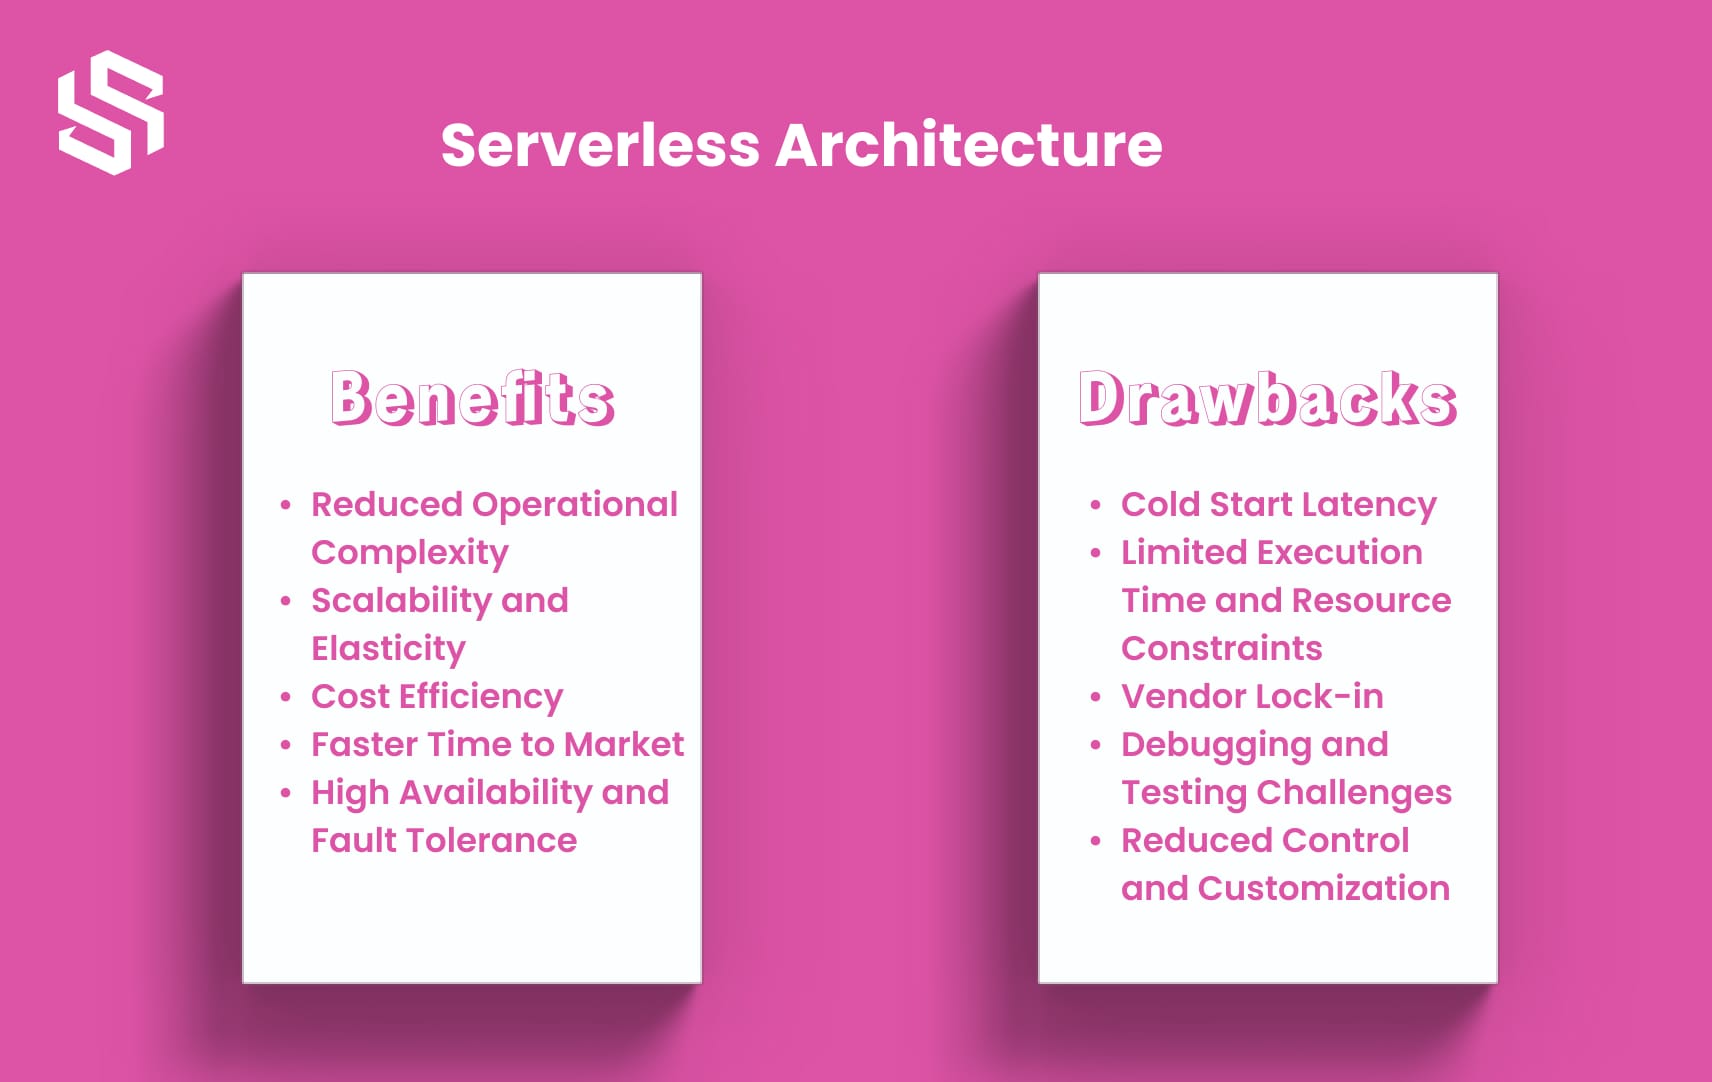 Benefits and Drawbacks of Serverless Architecture